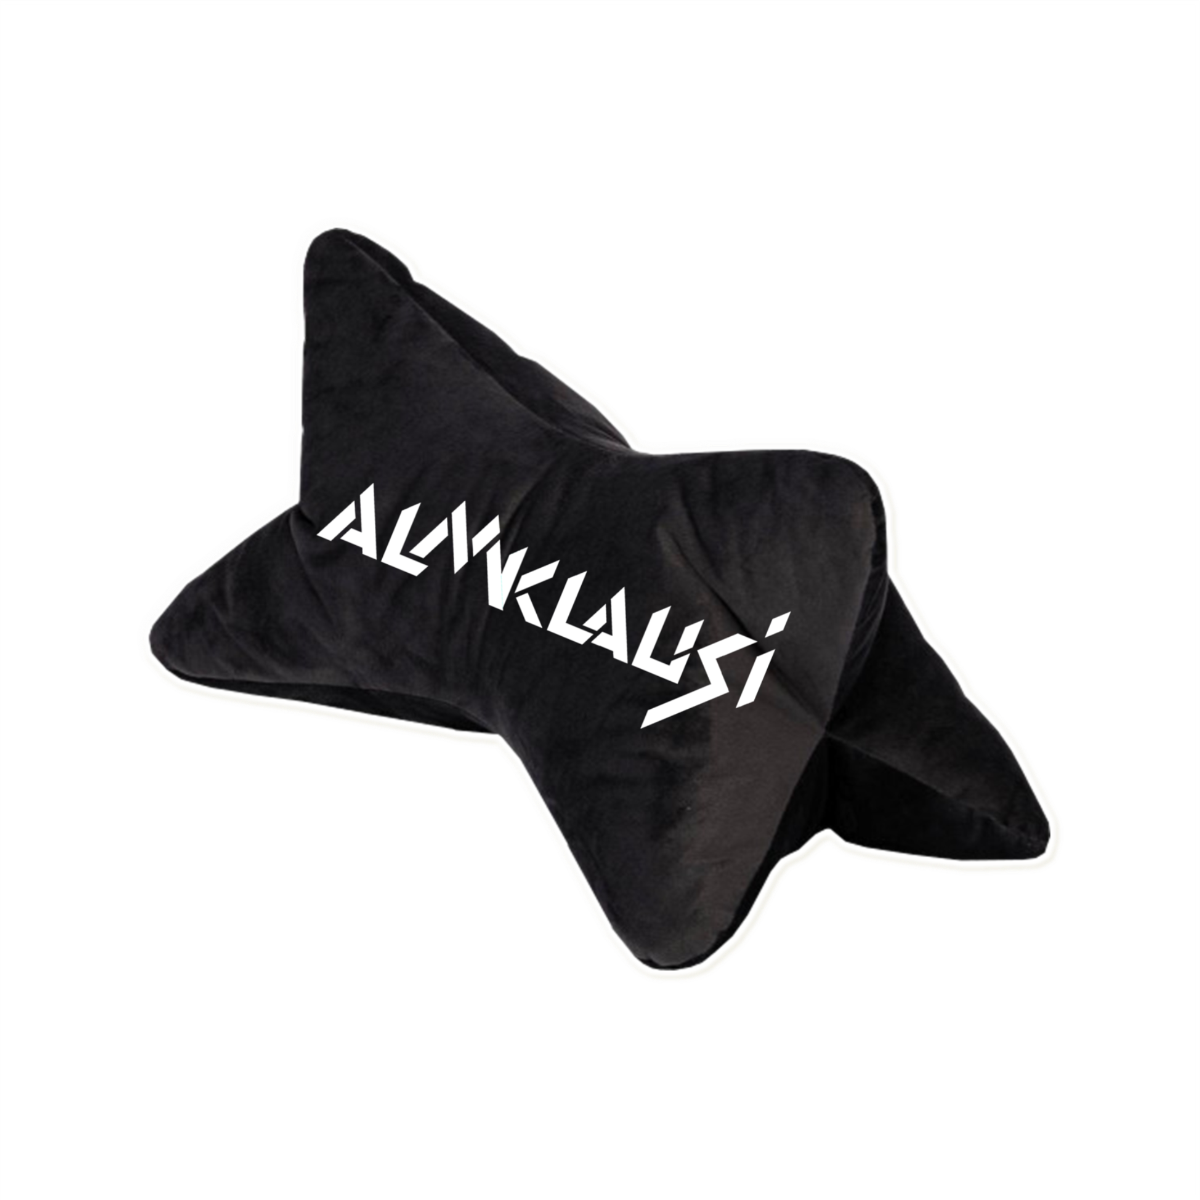 Reisekissen "ALMKLAUSI Logo" schwarz, bestickt